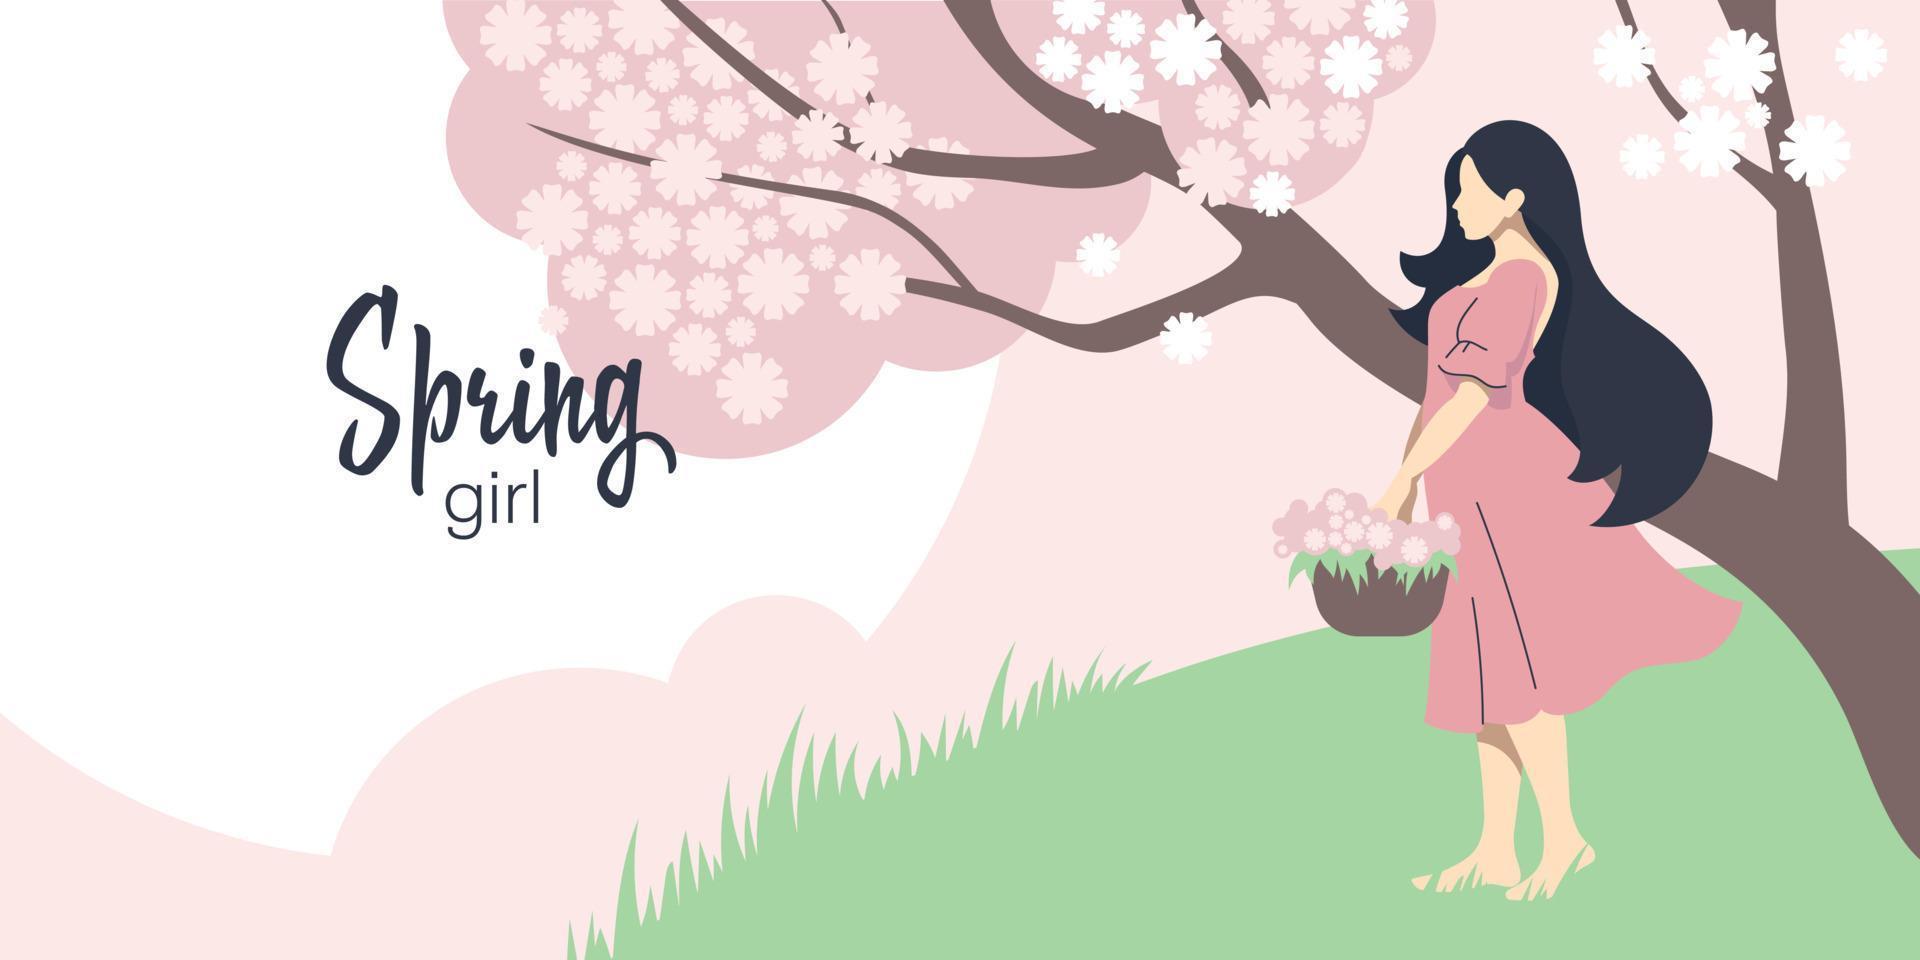 vårtjej. vacker flicka med en korg med blommor på bakgrunden av vårens natur. vektor bild.